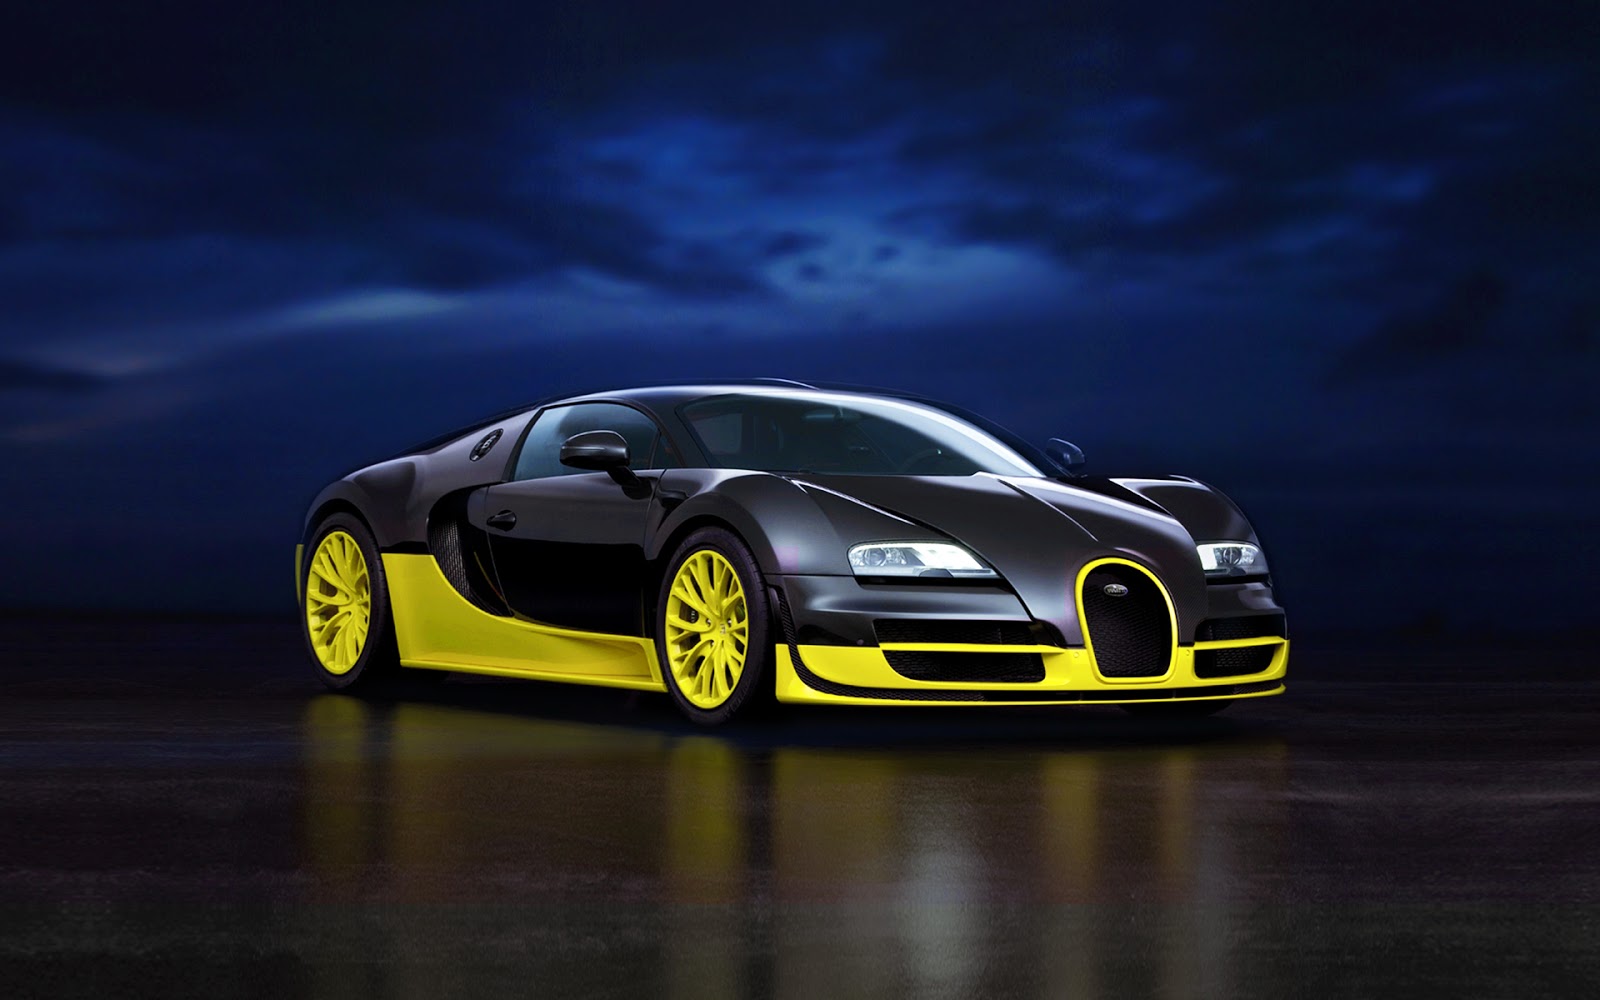 Bugatti Veyron Super Sport is a very high price 2